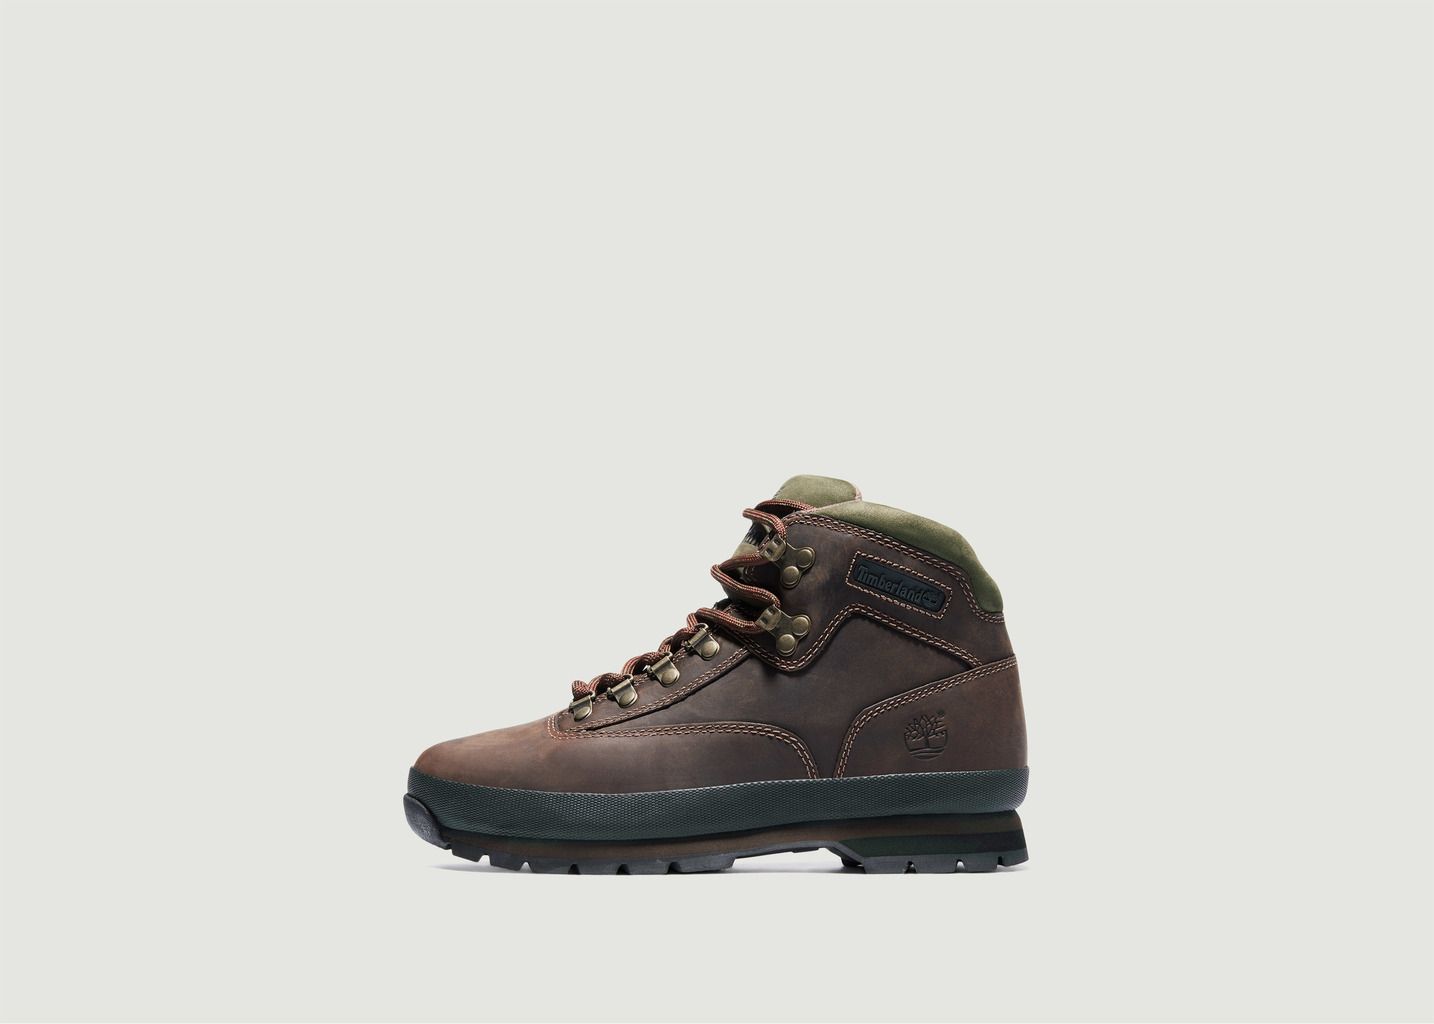 Euro Hiker boots - Timberland